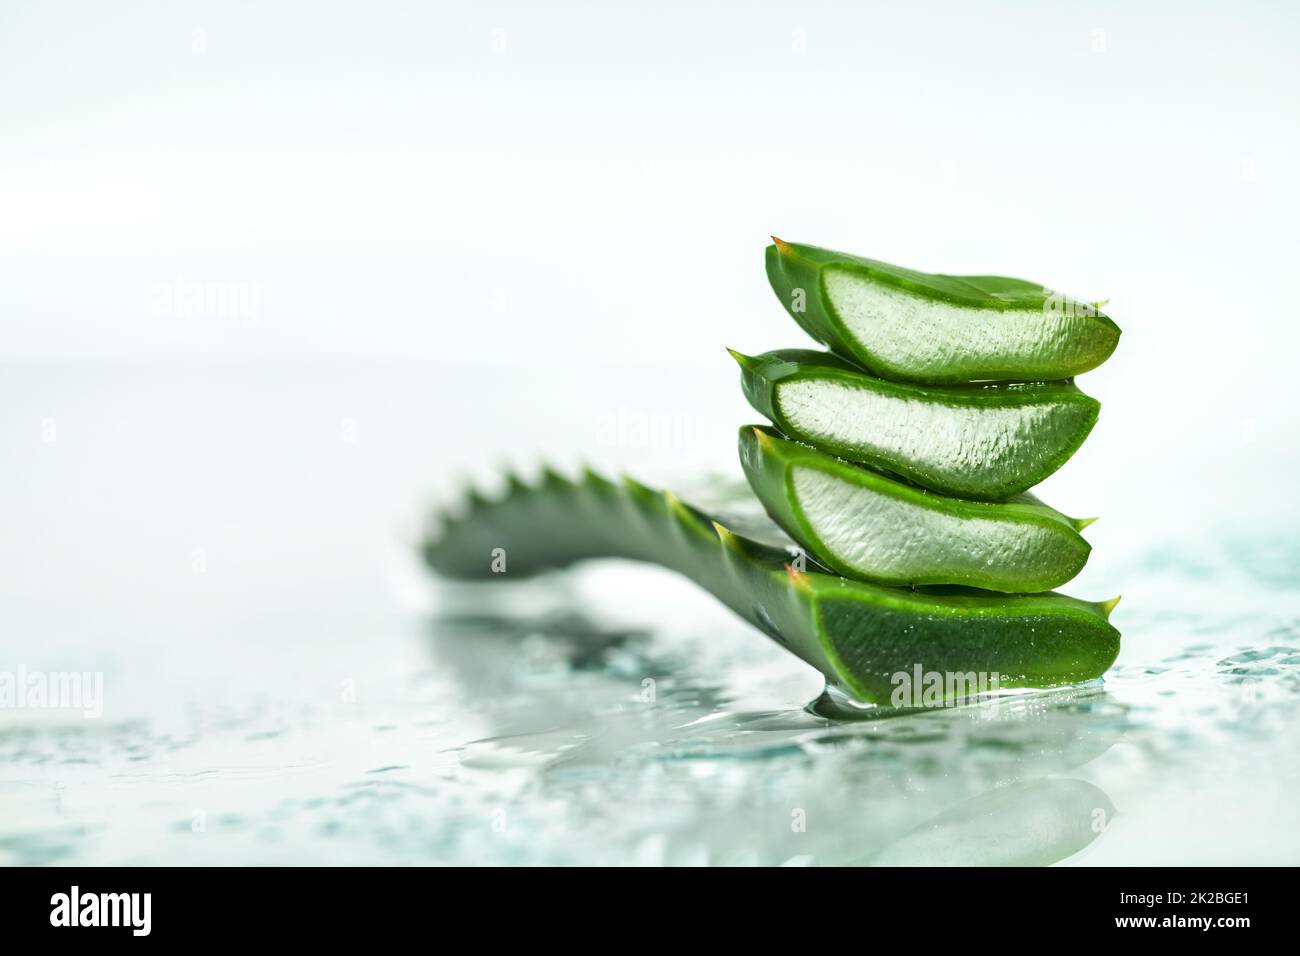 Natures medicine. Closeup shot of a sliced leaf of an aloe plant. Stock Photo